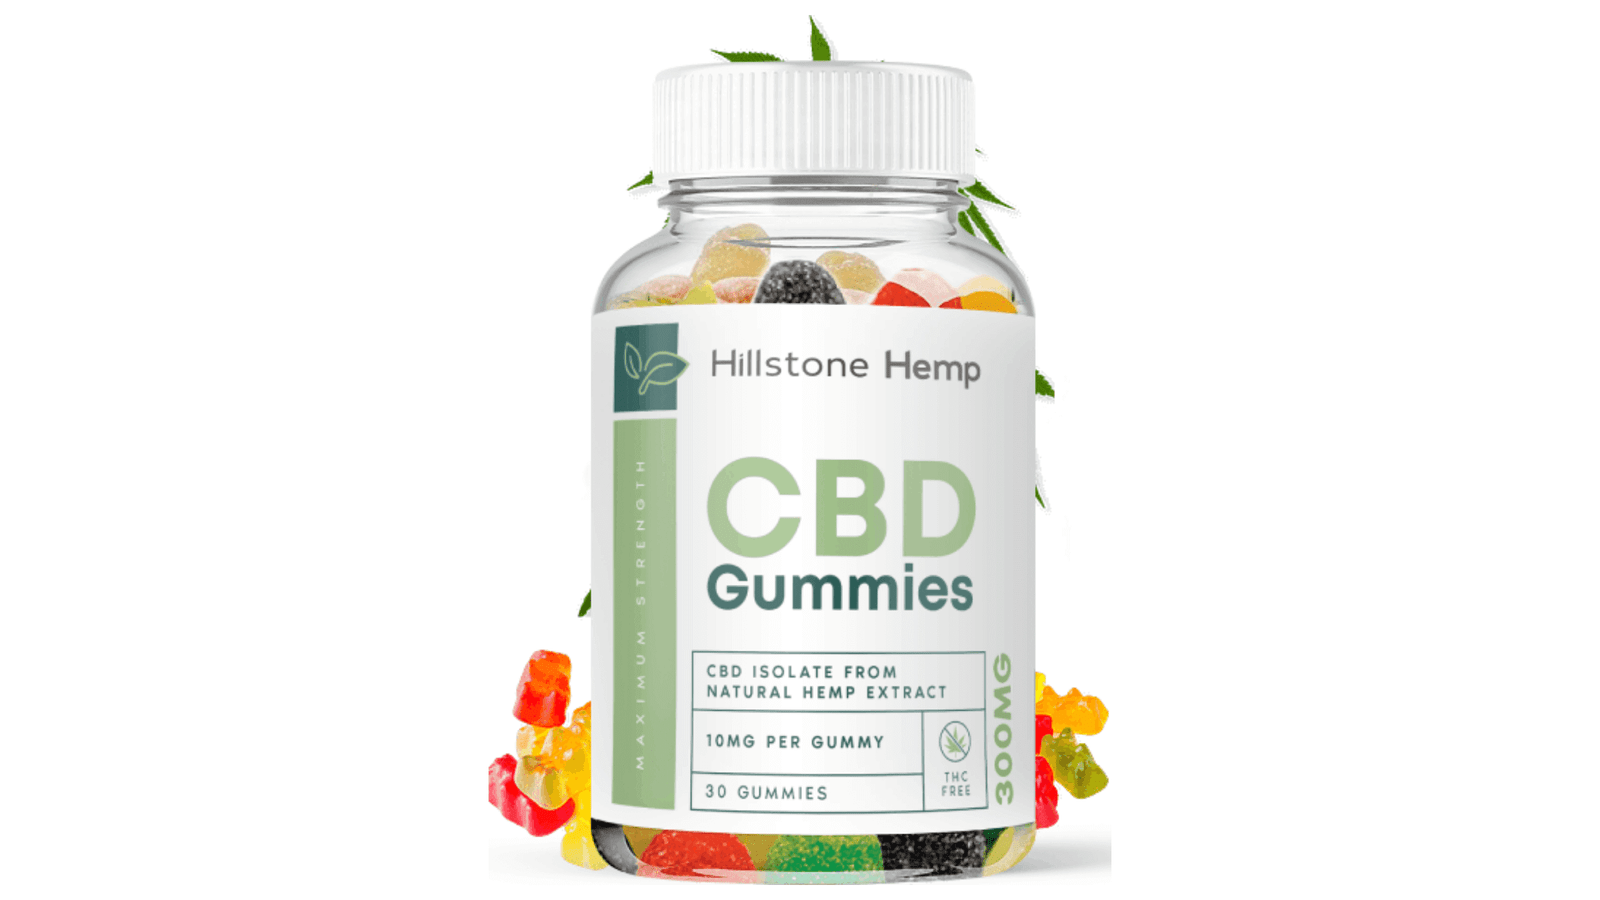 Hillstone Hemp CBD Gummies Supplement